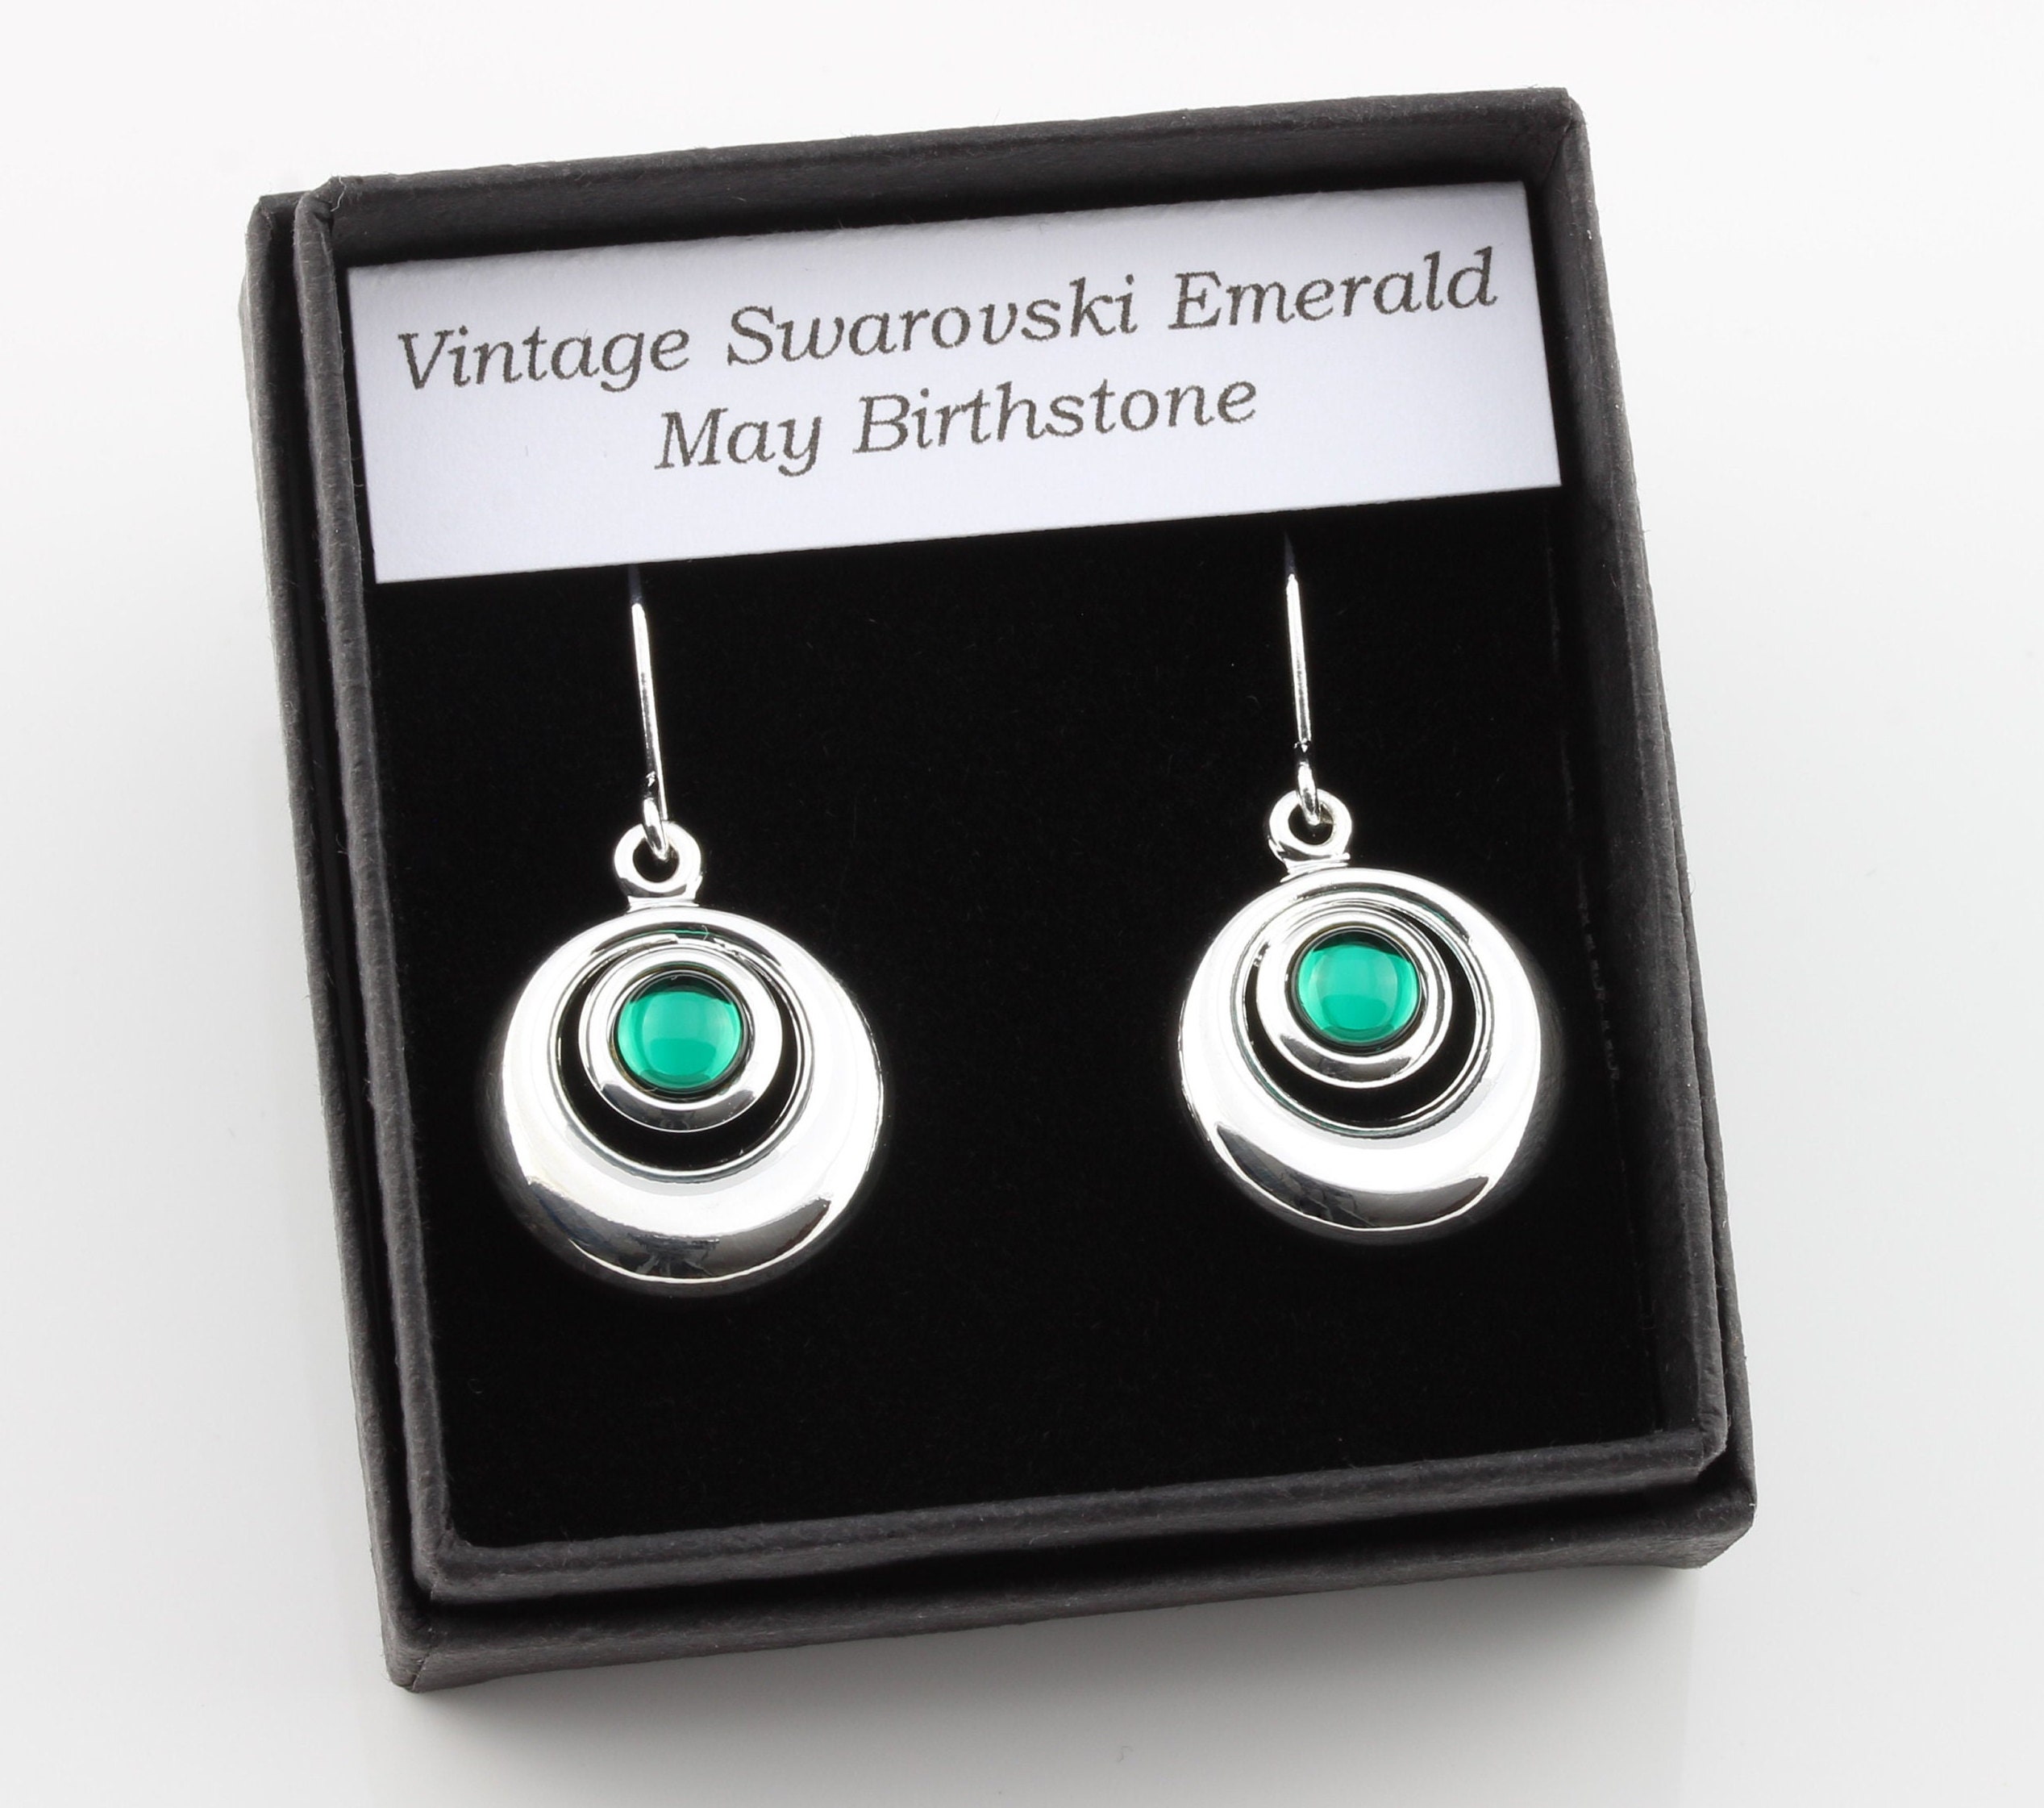 May Birthstone Vintage Swarovski Emerald Crystal Circular Cabochon Drop Earrings